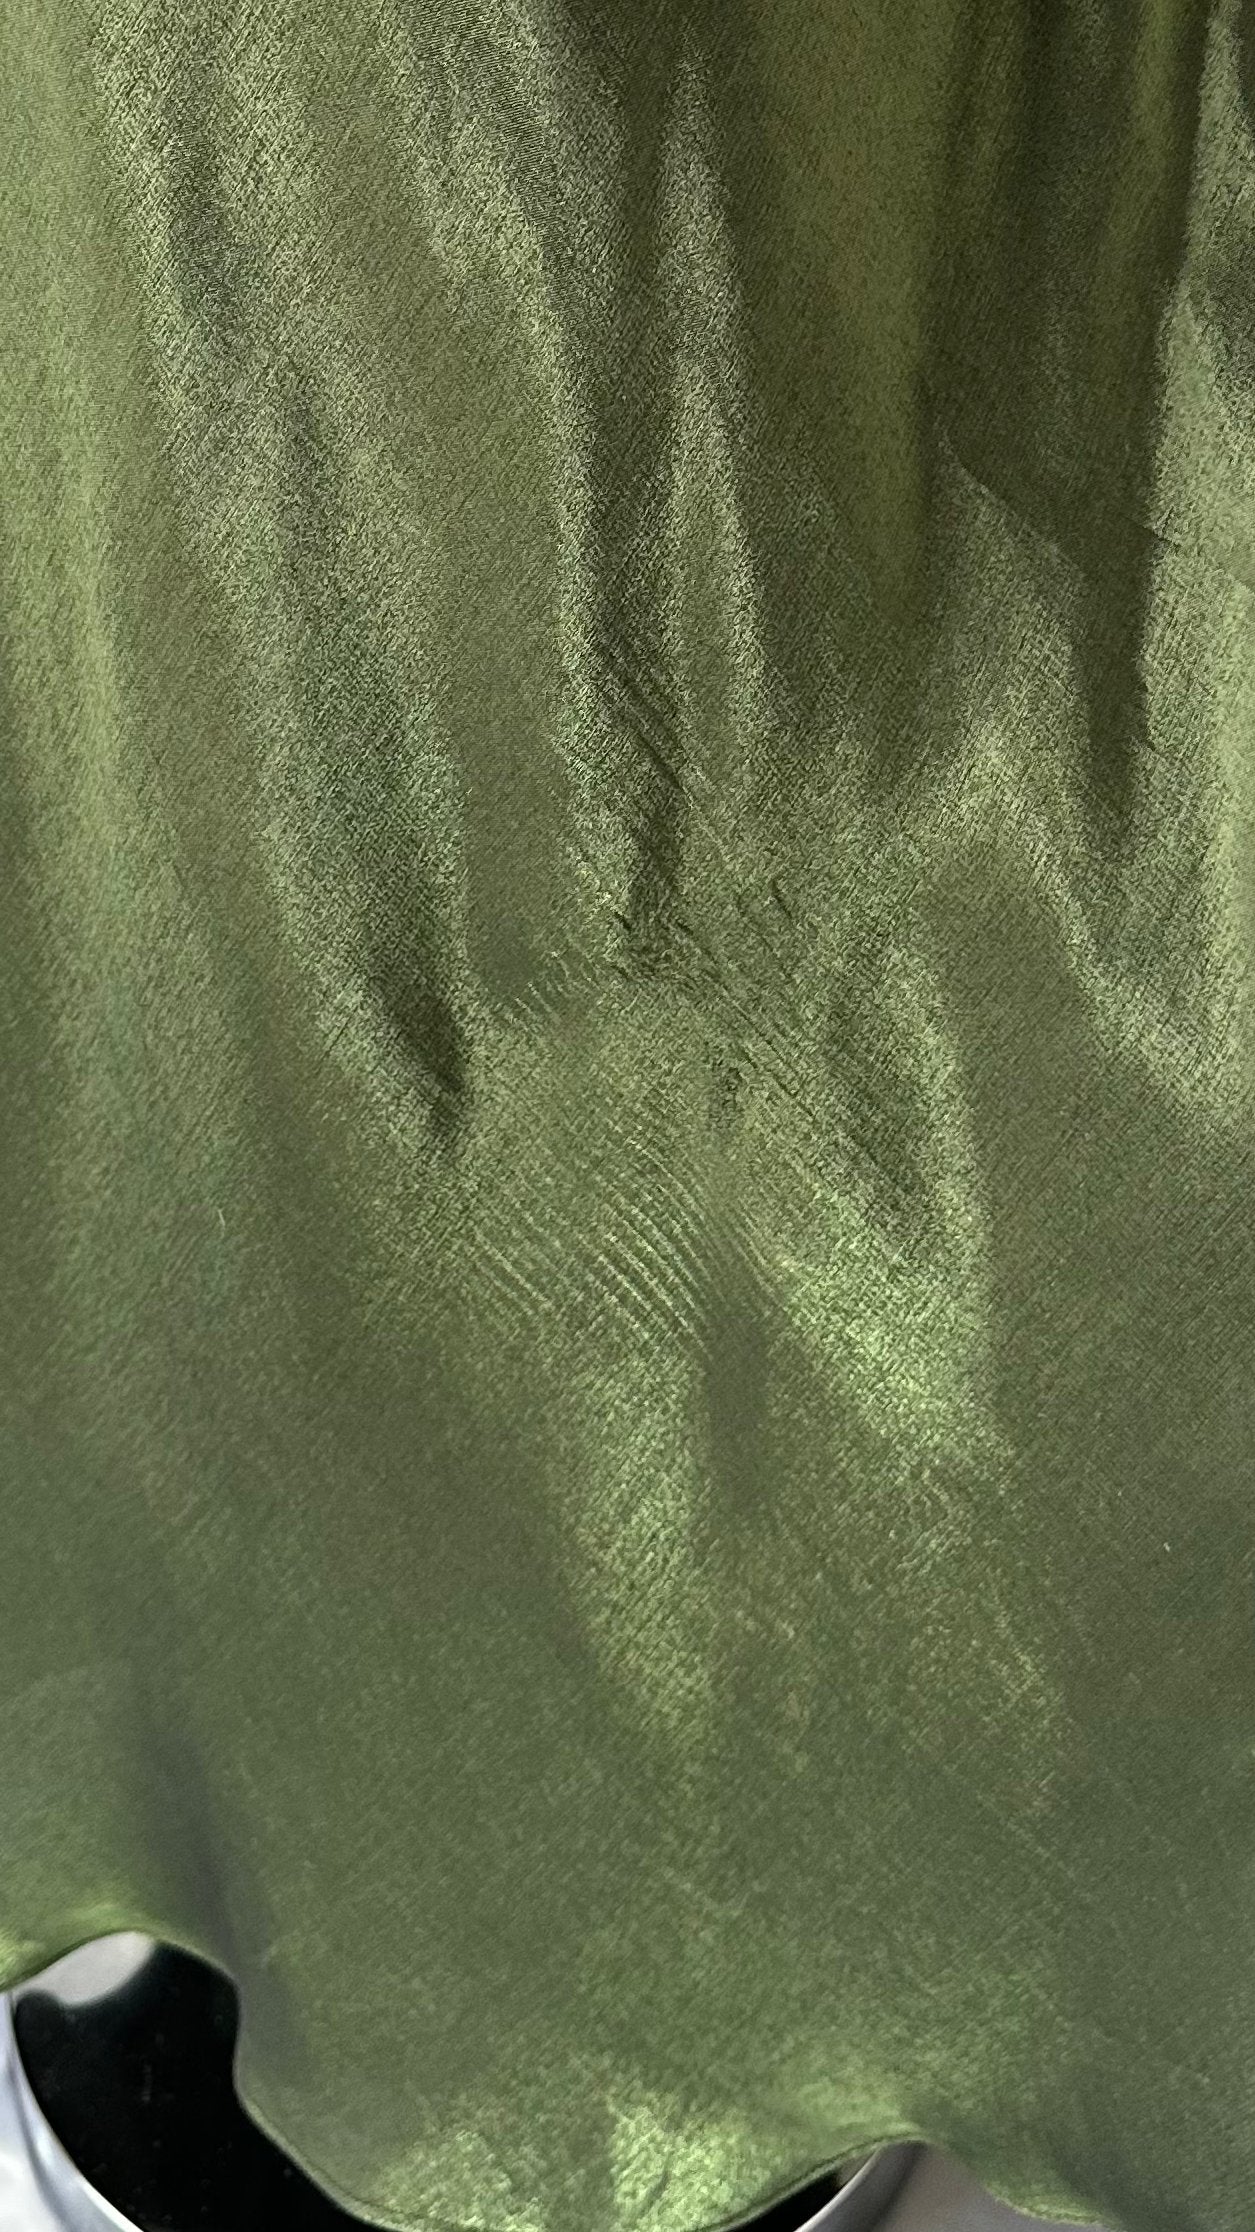 Iridescent Moss Green Vintage 00s Mesh Cowl Maxi Dress